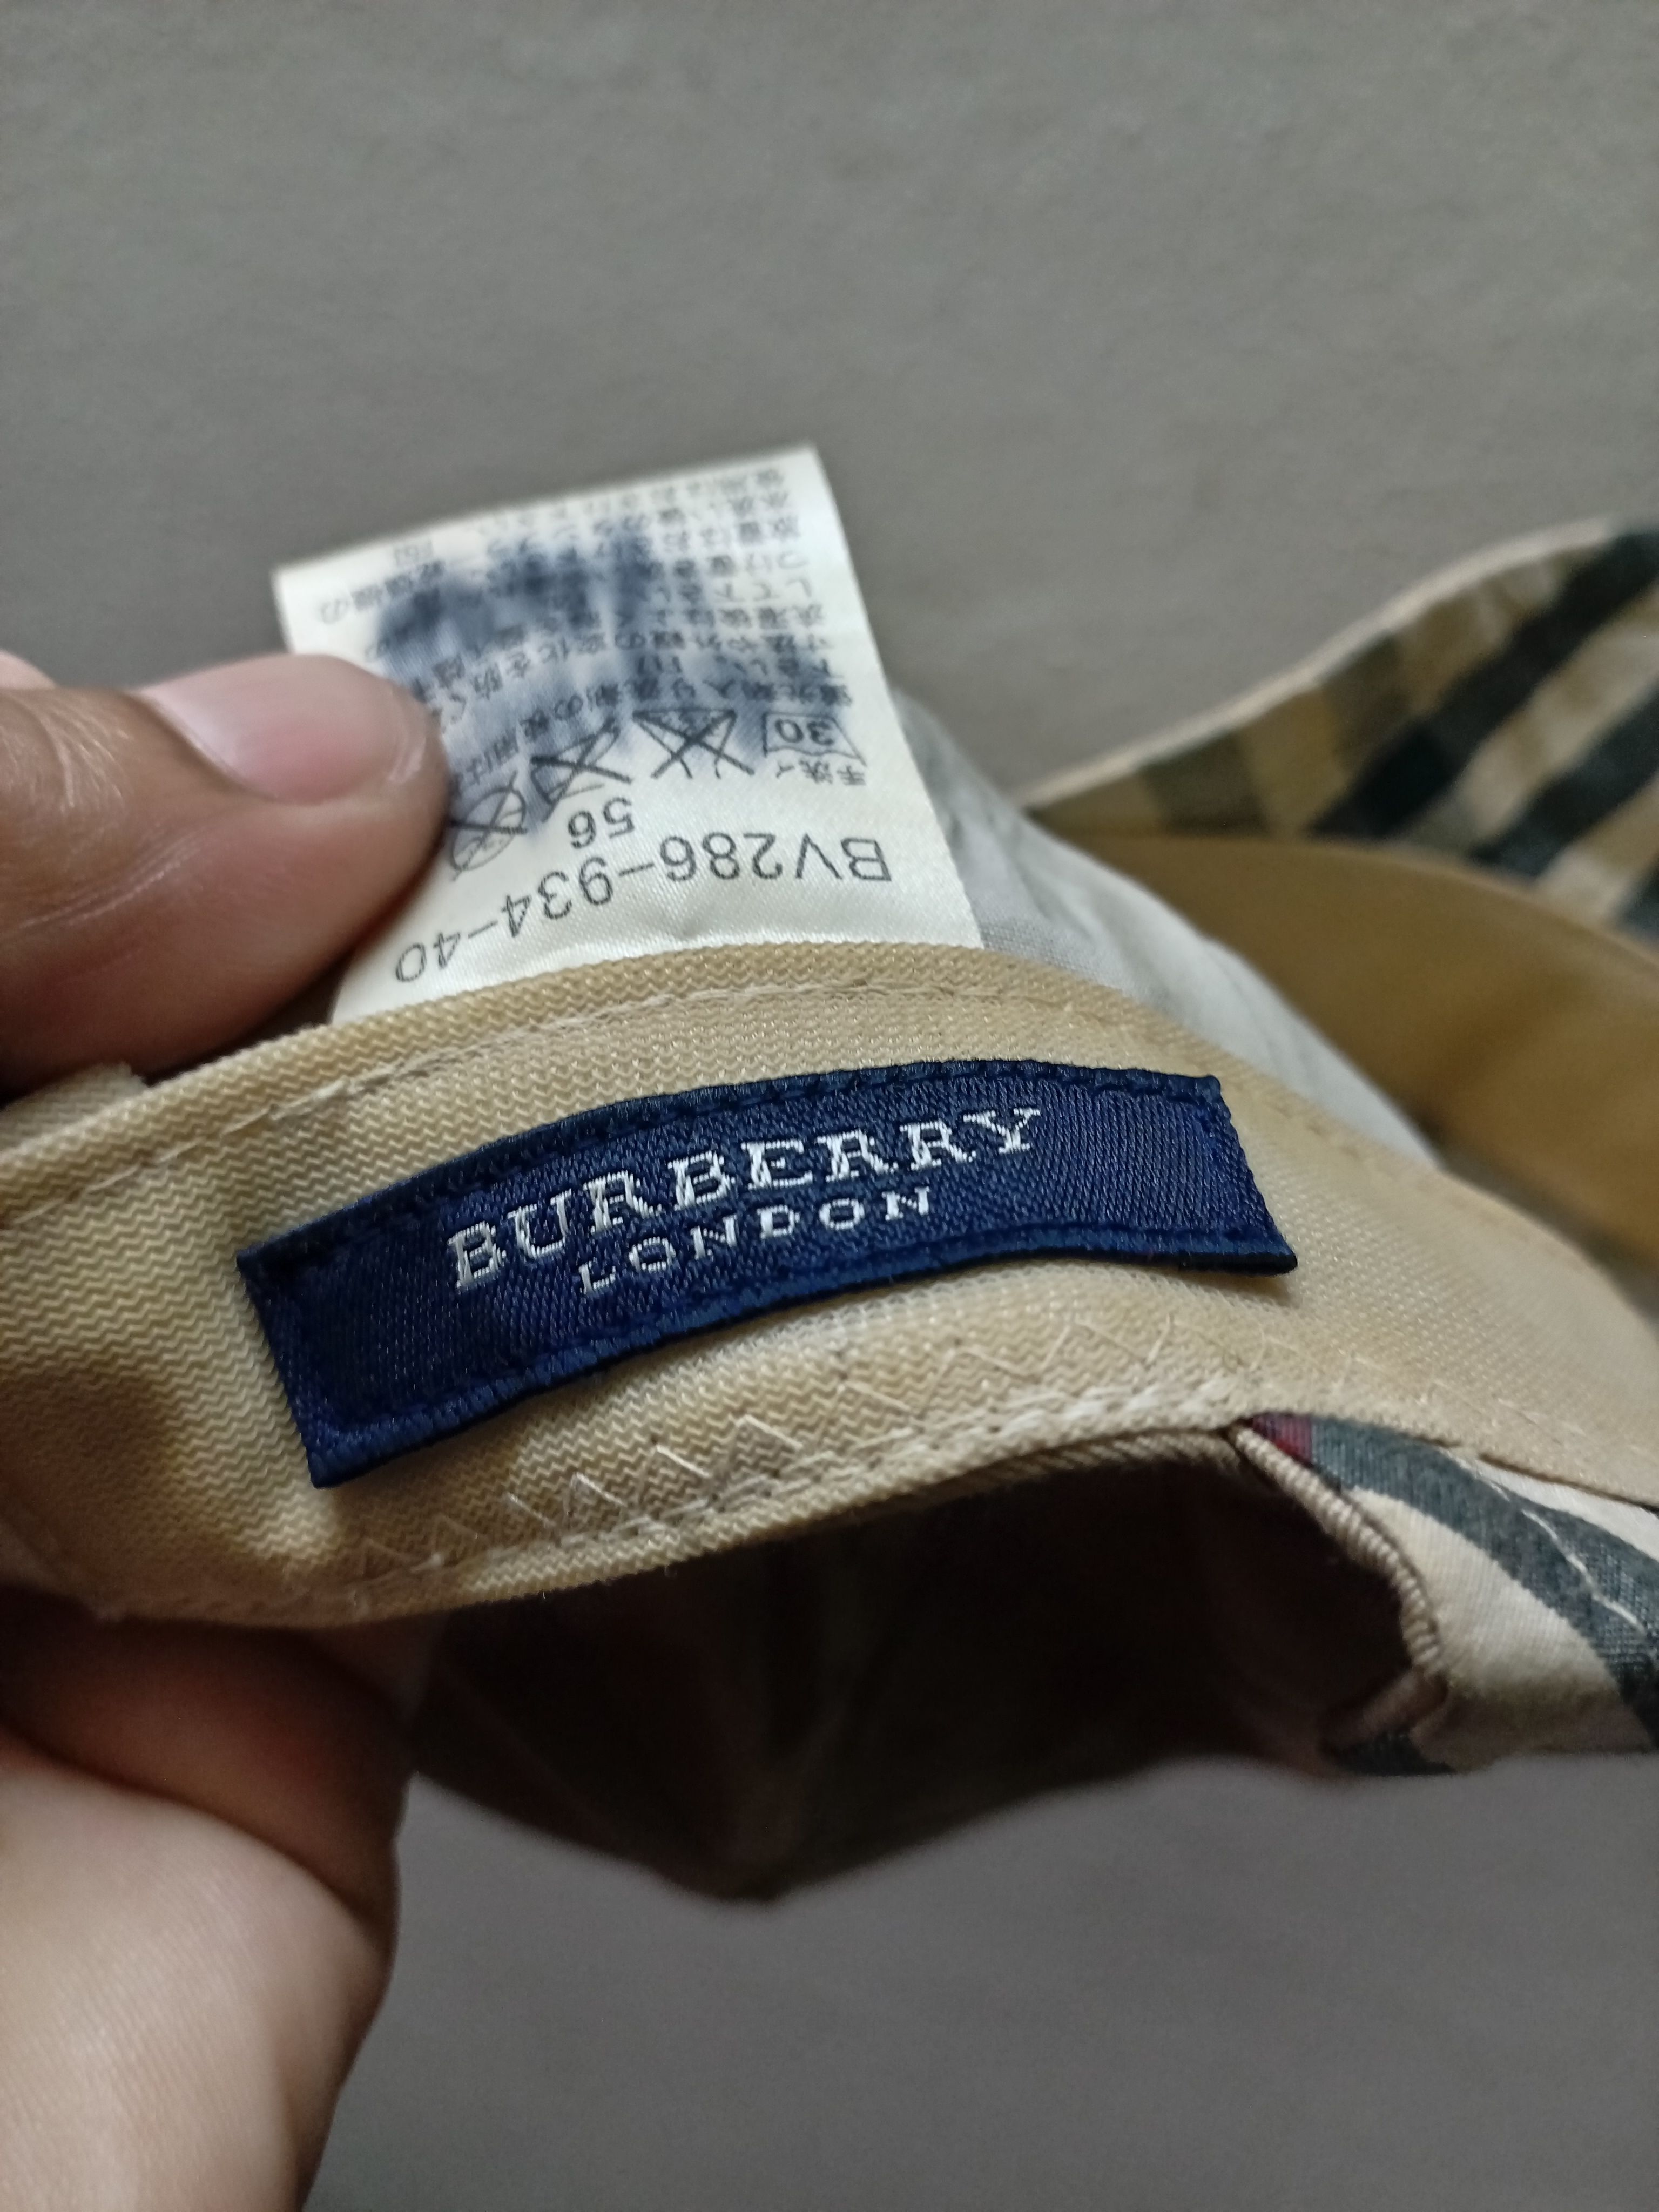 Burberry hat - 3